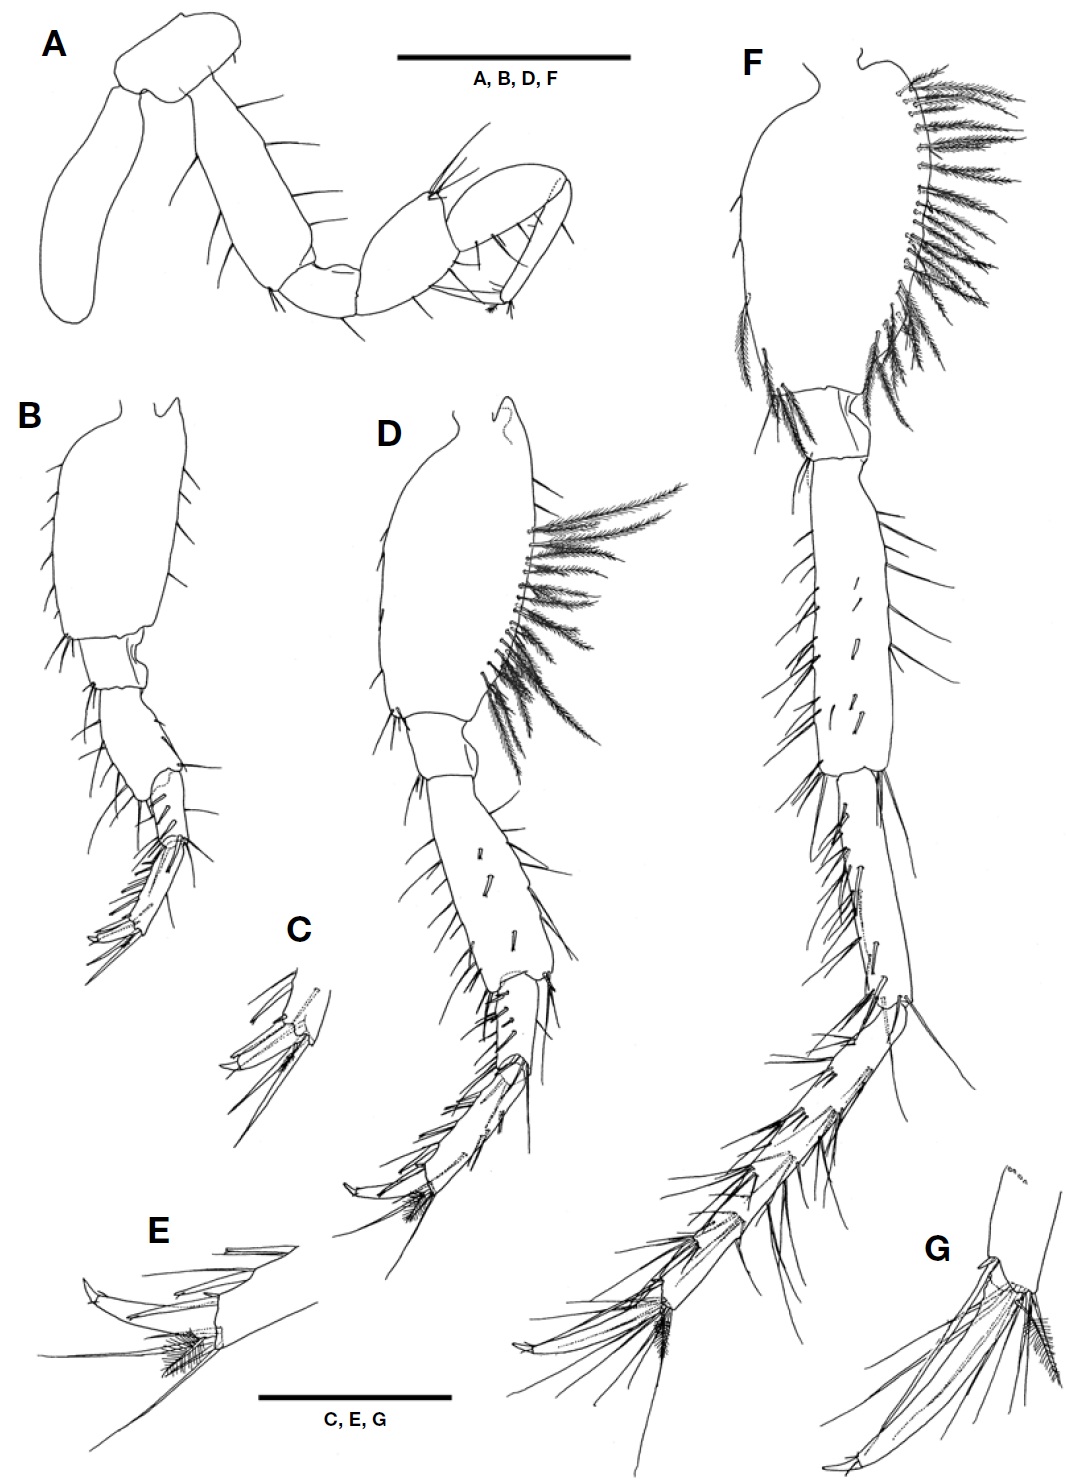 Paragrandidierella minima Ariyama, 2002, male. A, Pereopod 4; B, Left pereopod 5; C, Distal corner of propodus and dactylus of pereopod 5; D, Left pereopod 6; E, Distal corner of propodus and dactylus of pereopod 6; F, Left pereopod 7; G, Distal corner of propodus and dactylus of pereopod 7. Scale bars: A, B, D, F=0.5 mm, C, E, G=0.25 mm.